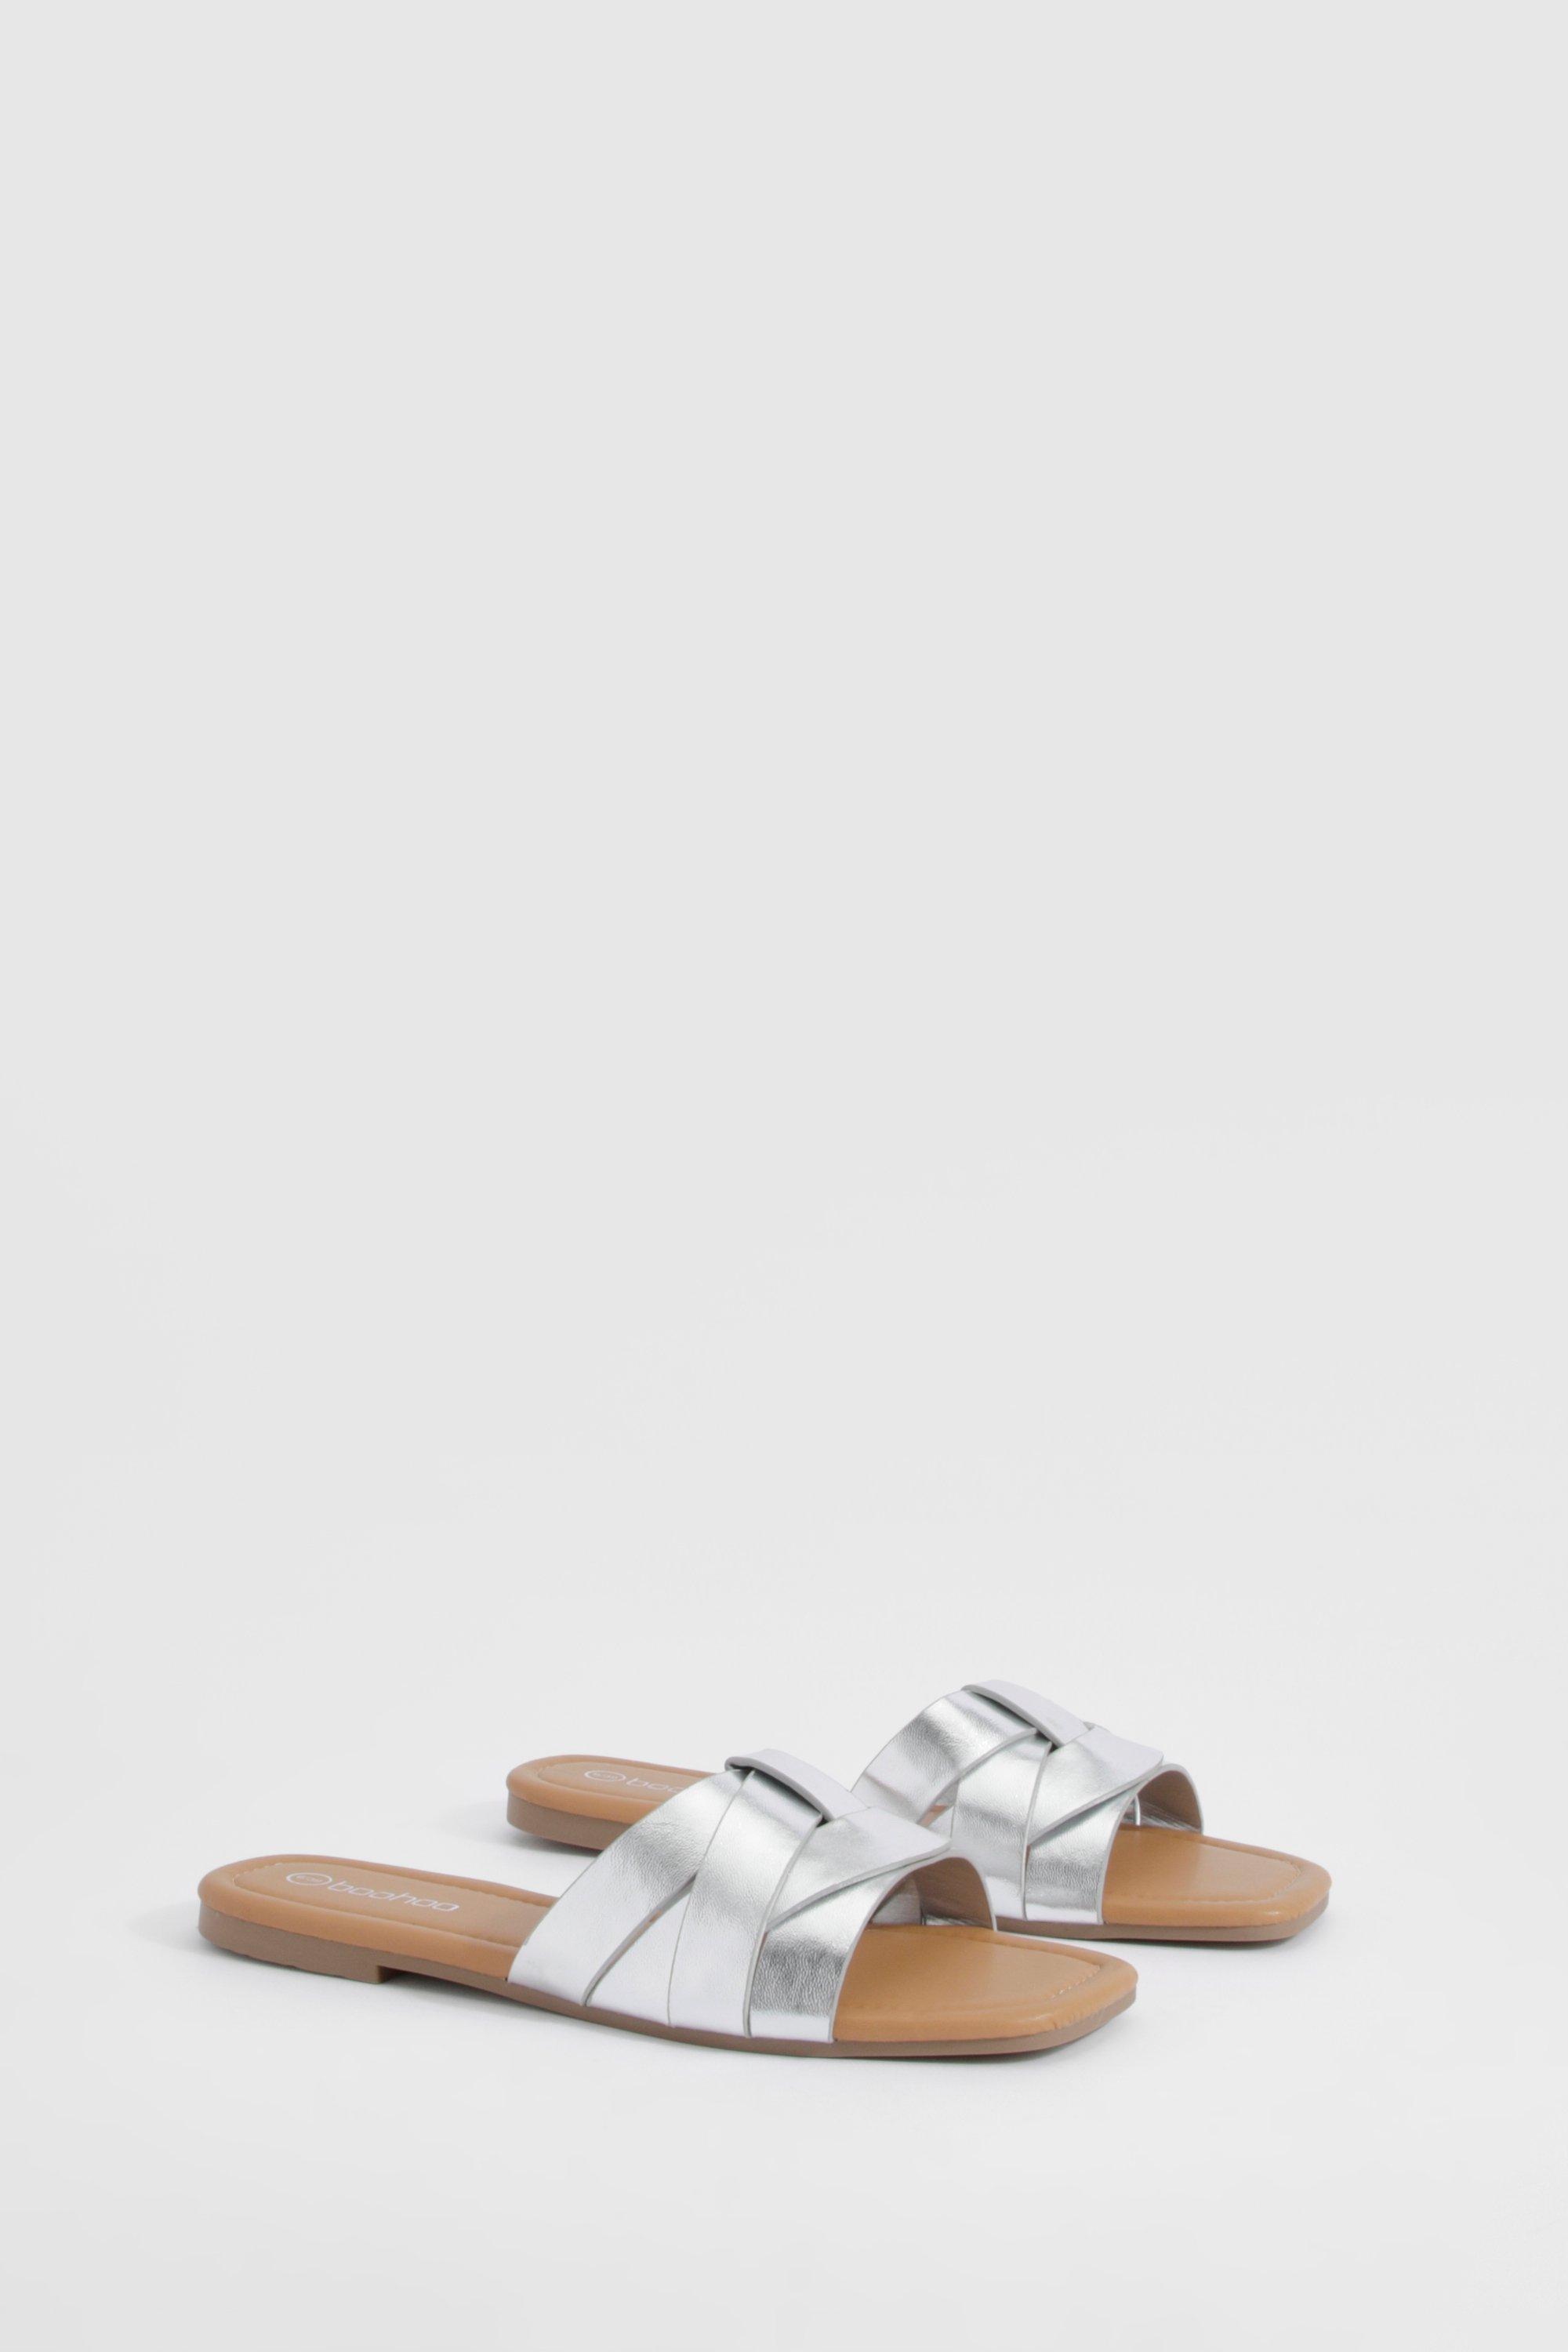 Image of Metallic Woven Basic Mule Sandals, Grigio